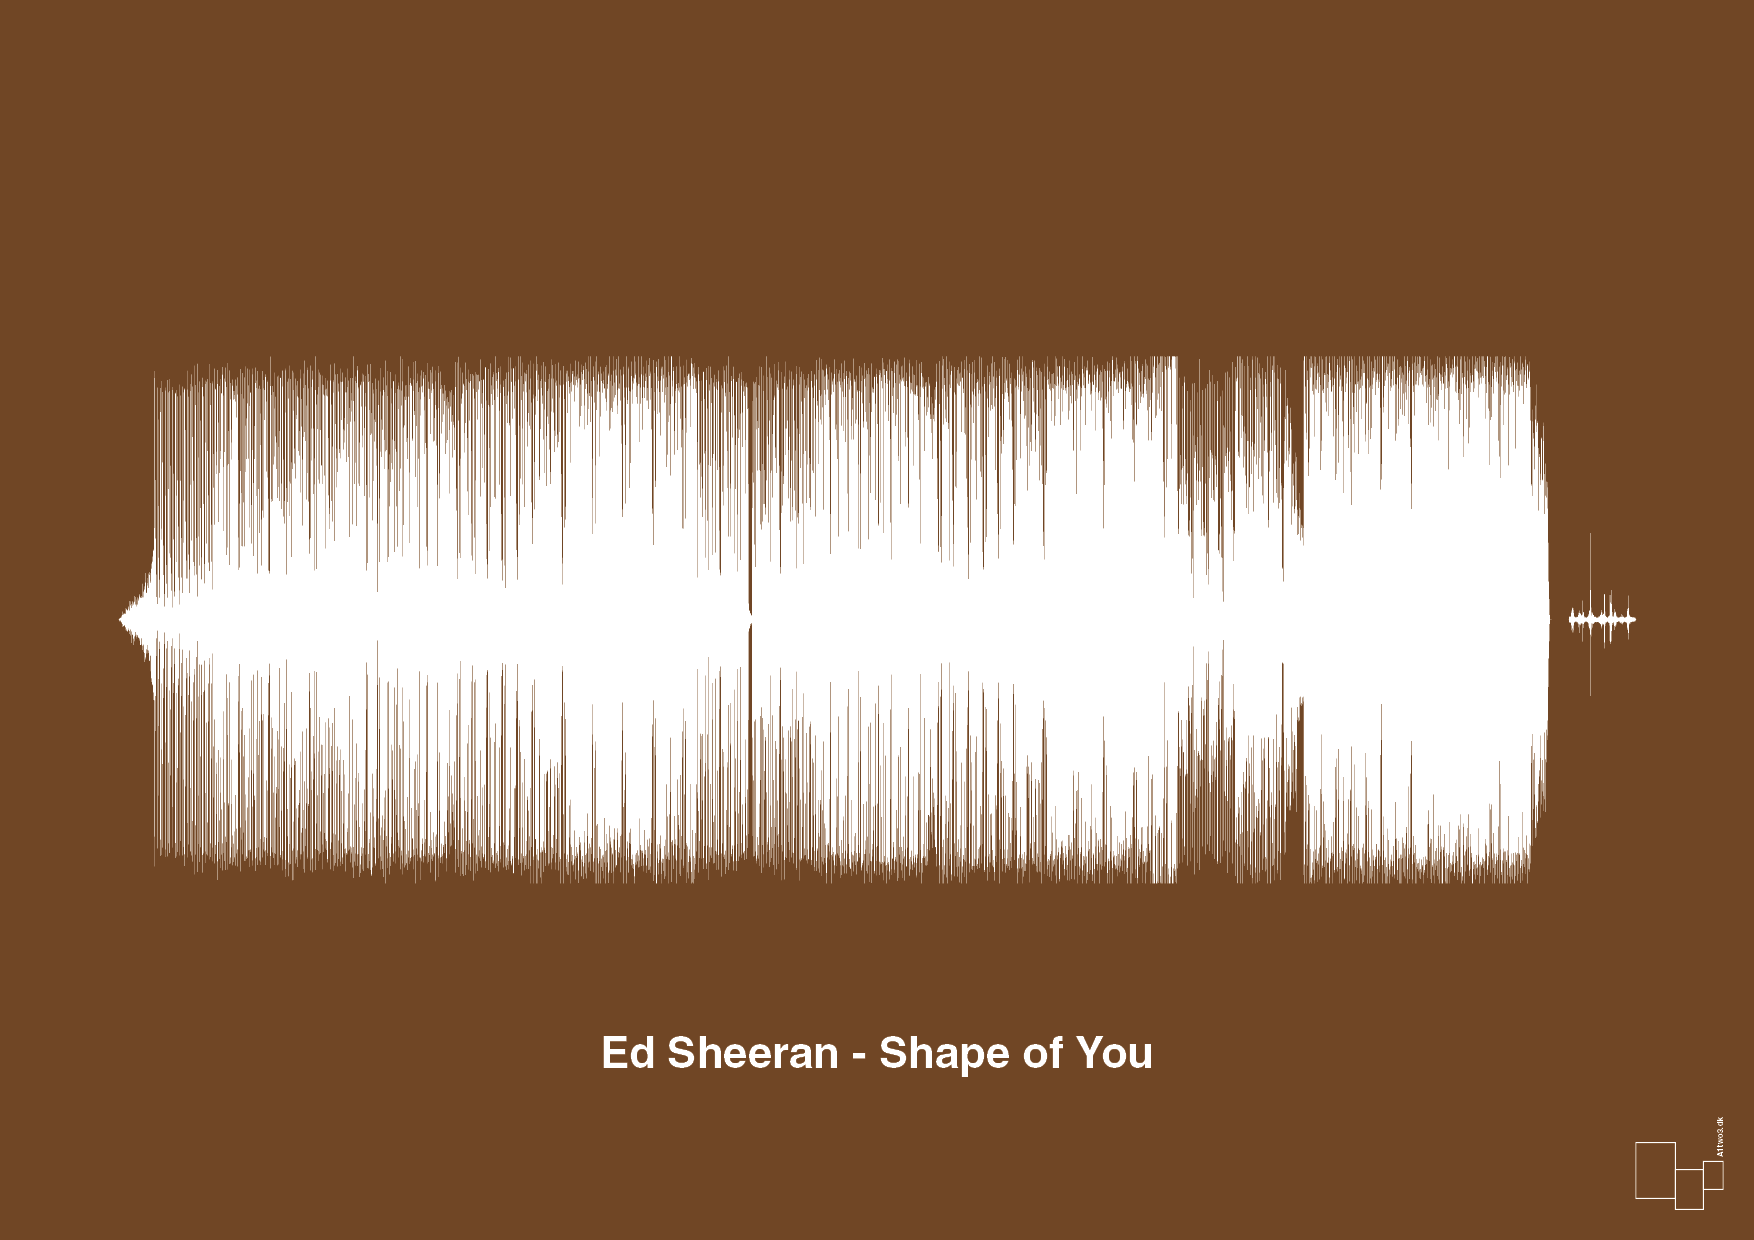 ed sheeran - shape of you - Plakat med Musik i Dark Brown